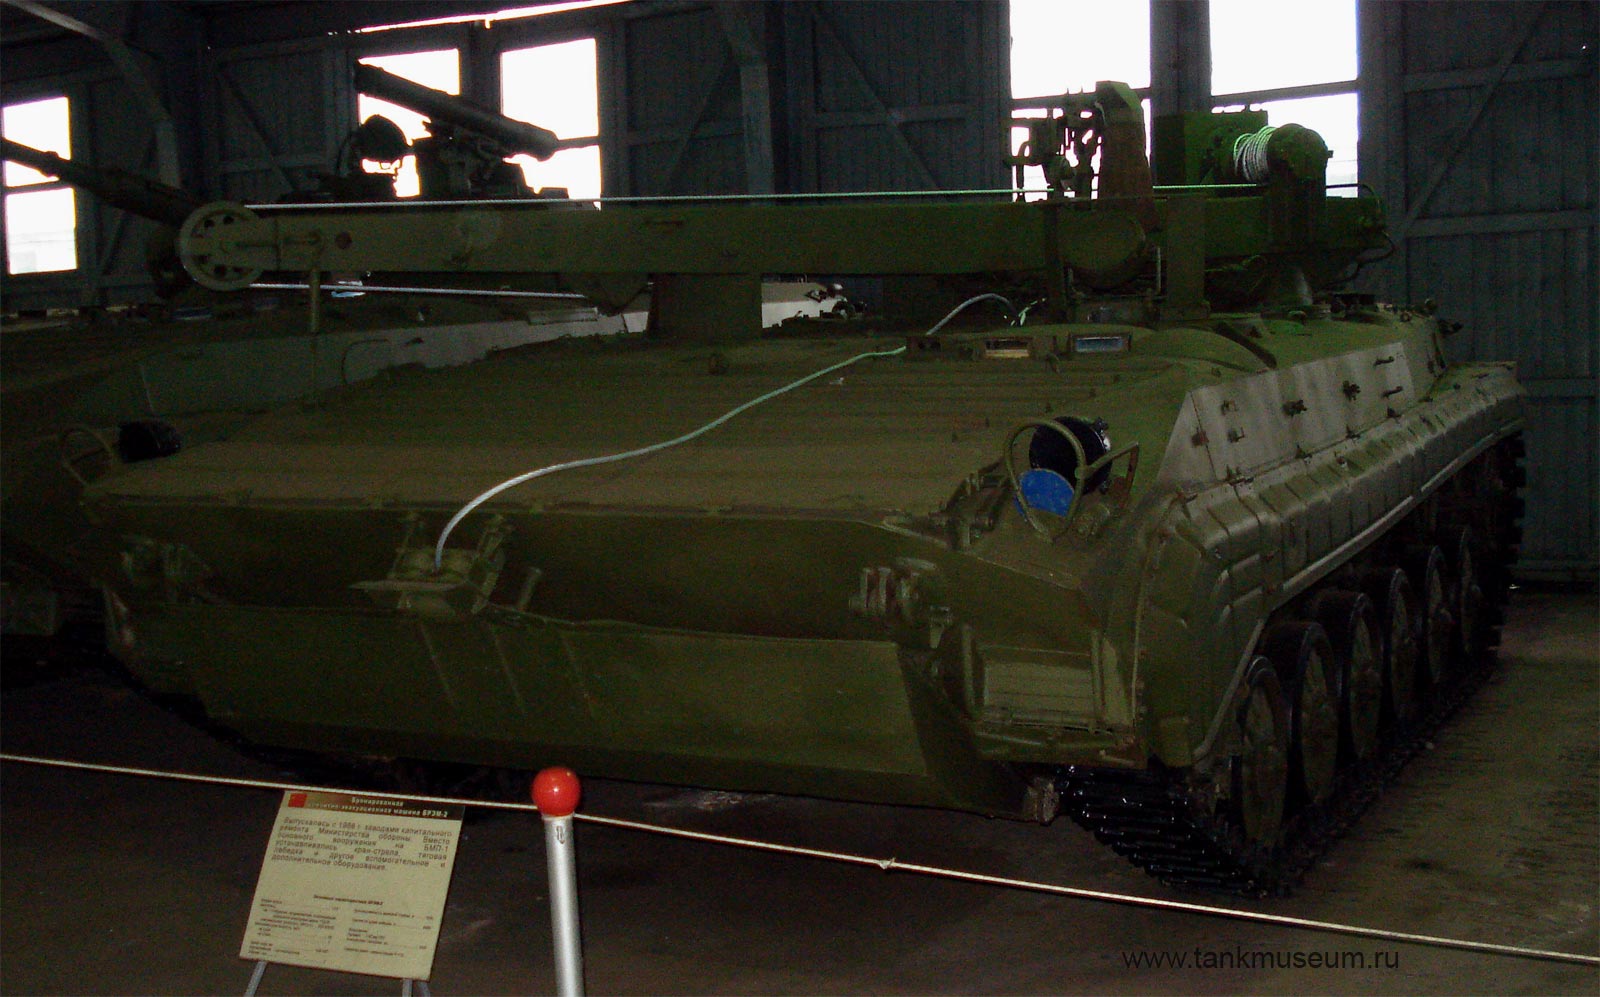 Kubinka tank museum Armored recovery vehicle BREM-2